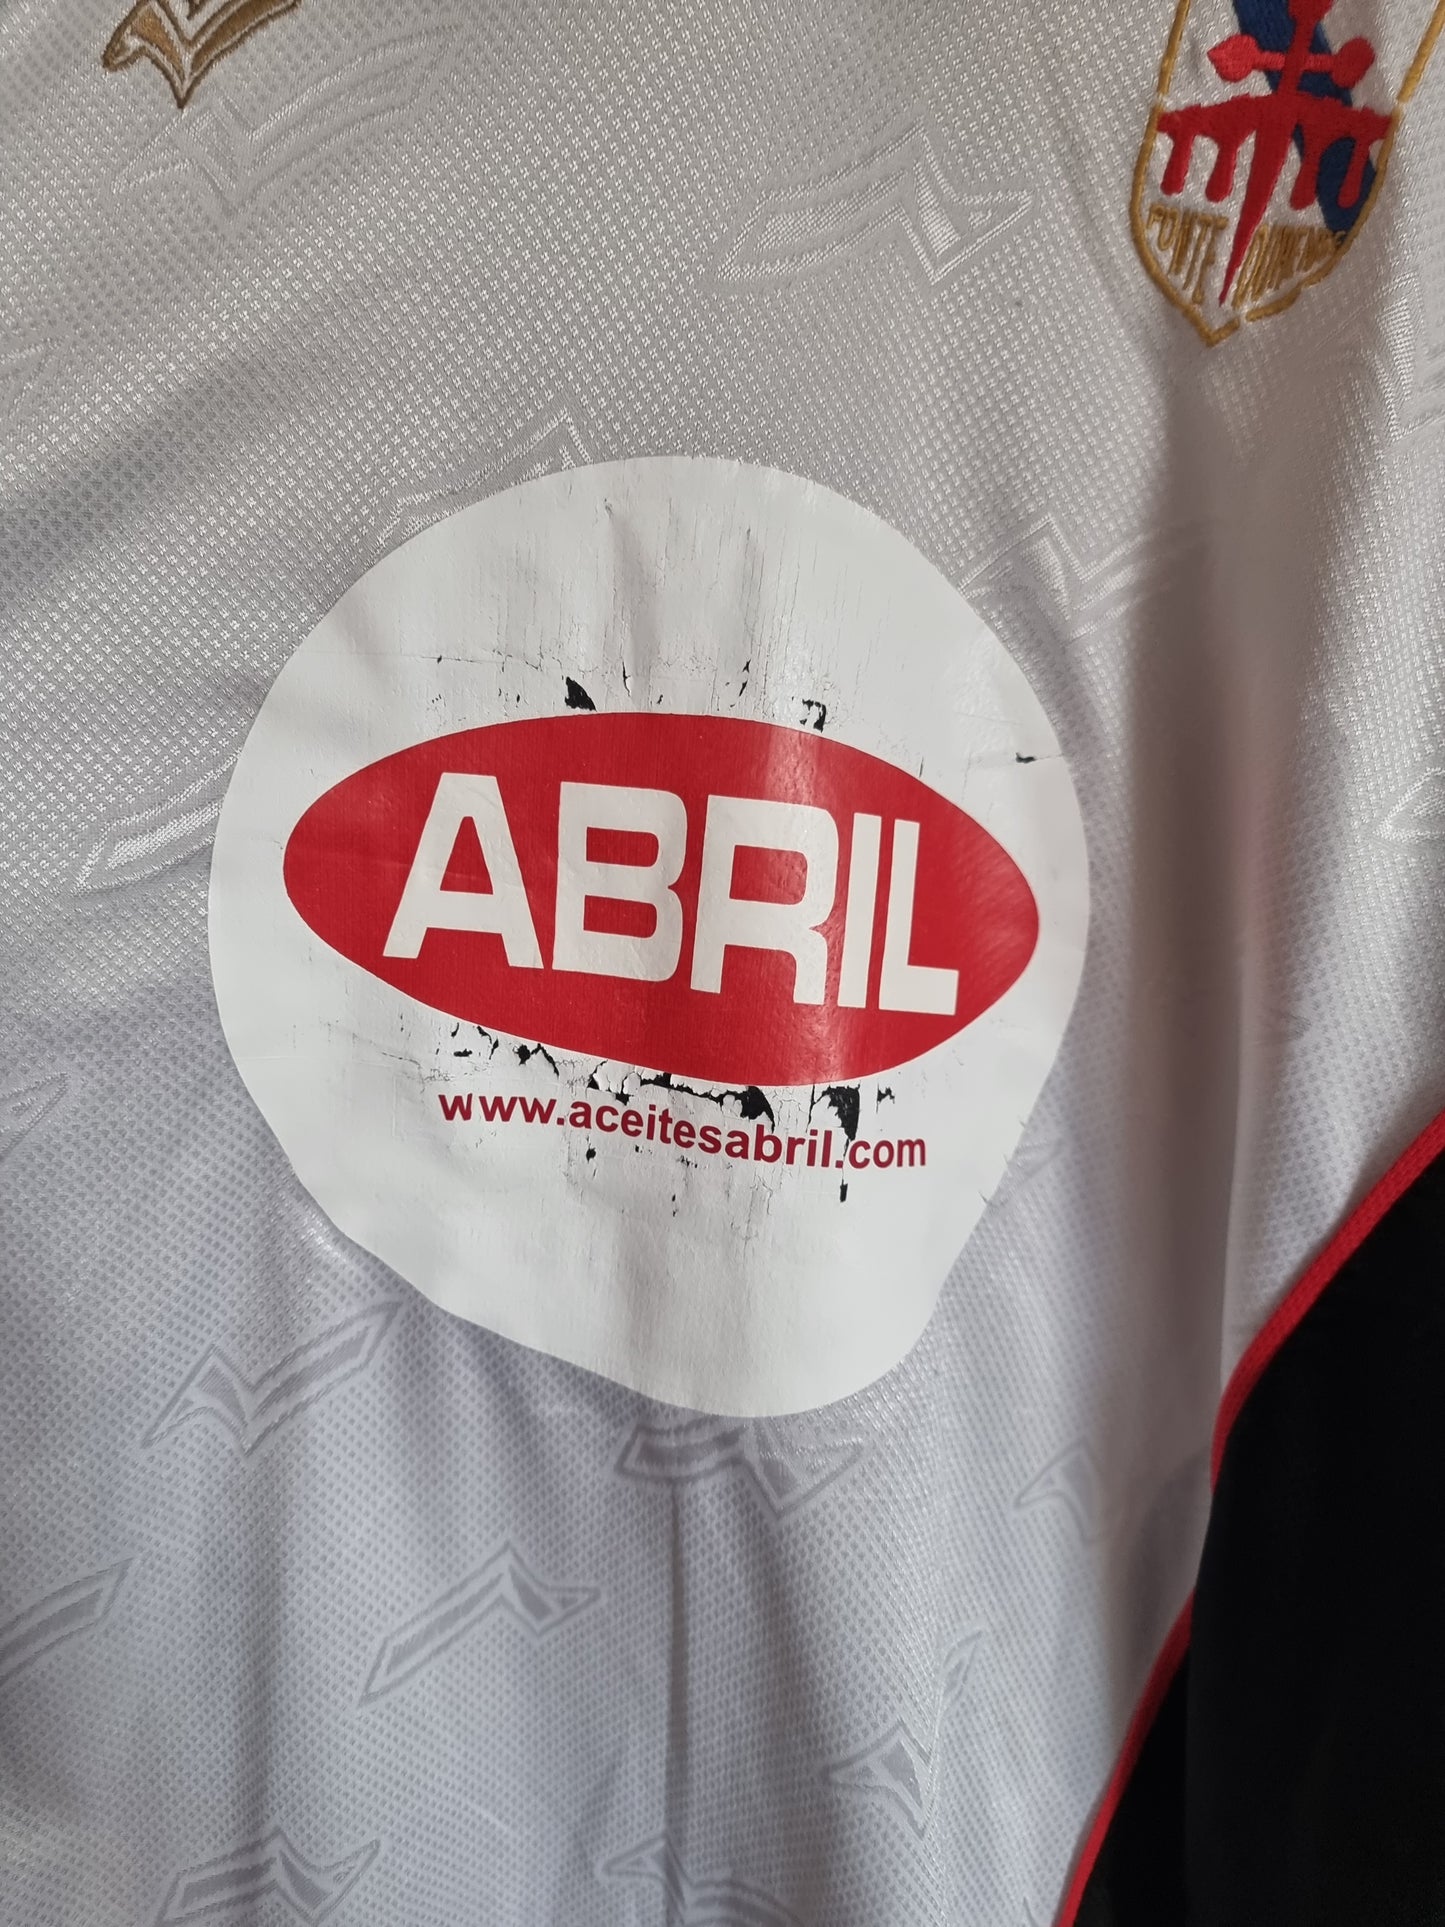 Zico Ponte Ourense Long Sleeve Football Shirt XL